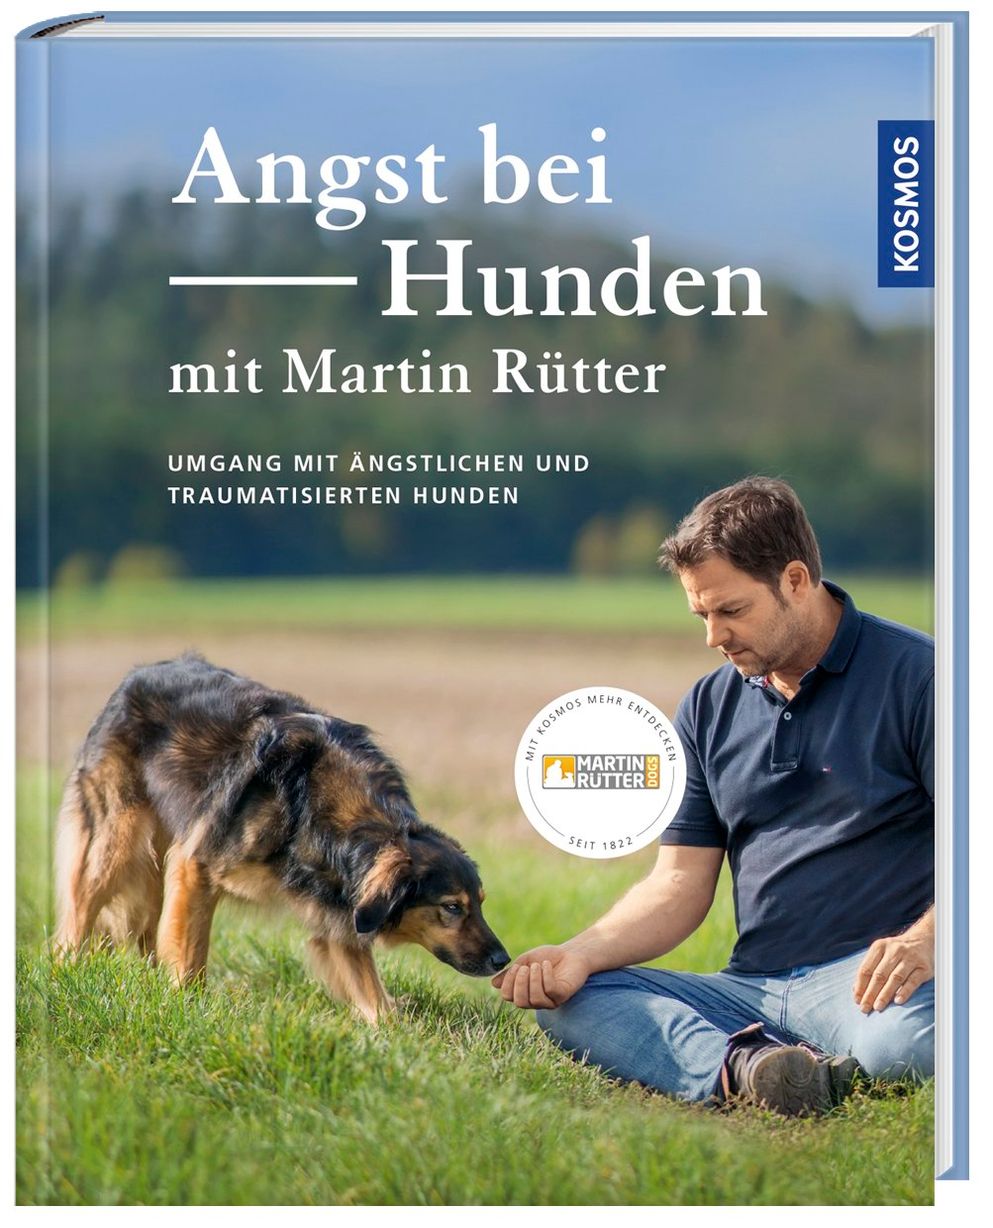 Angst bei Hunden - mit Martin Rütter Buch versandkostenfrei - Weltbild.de